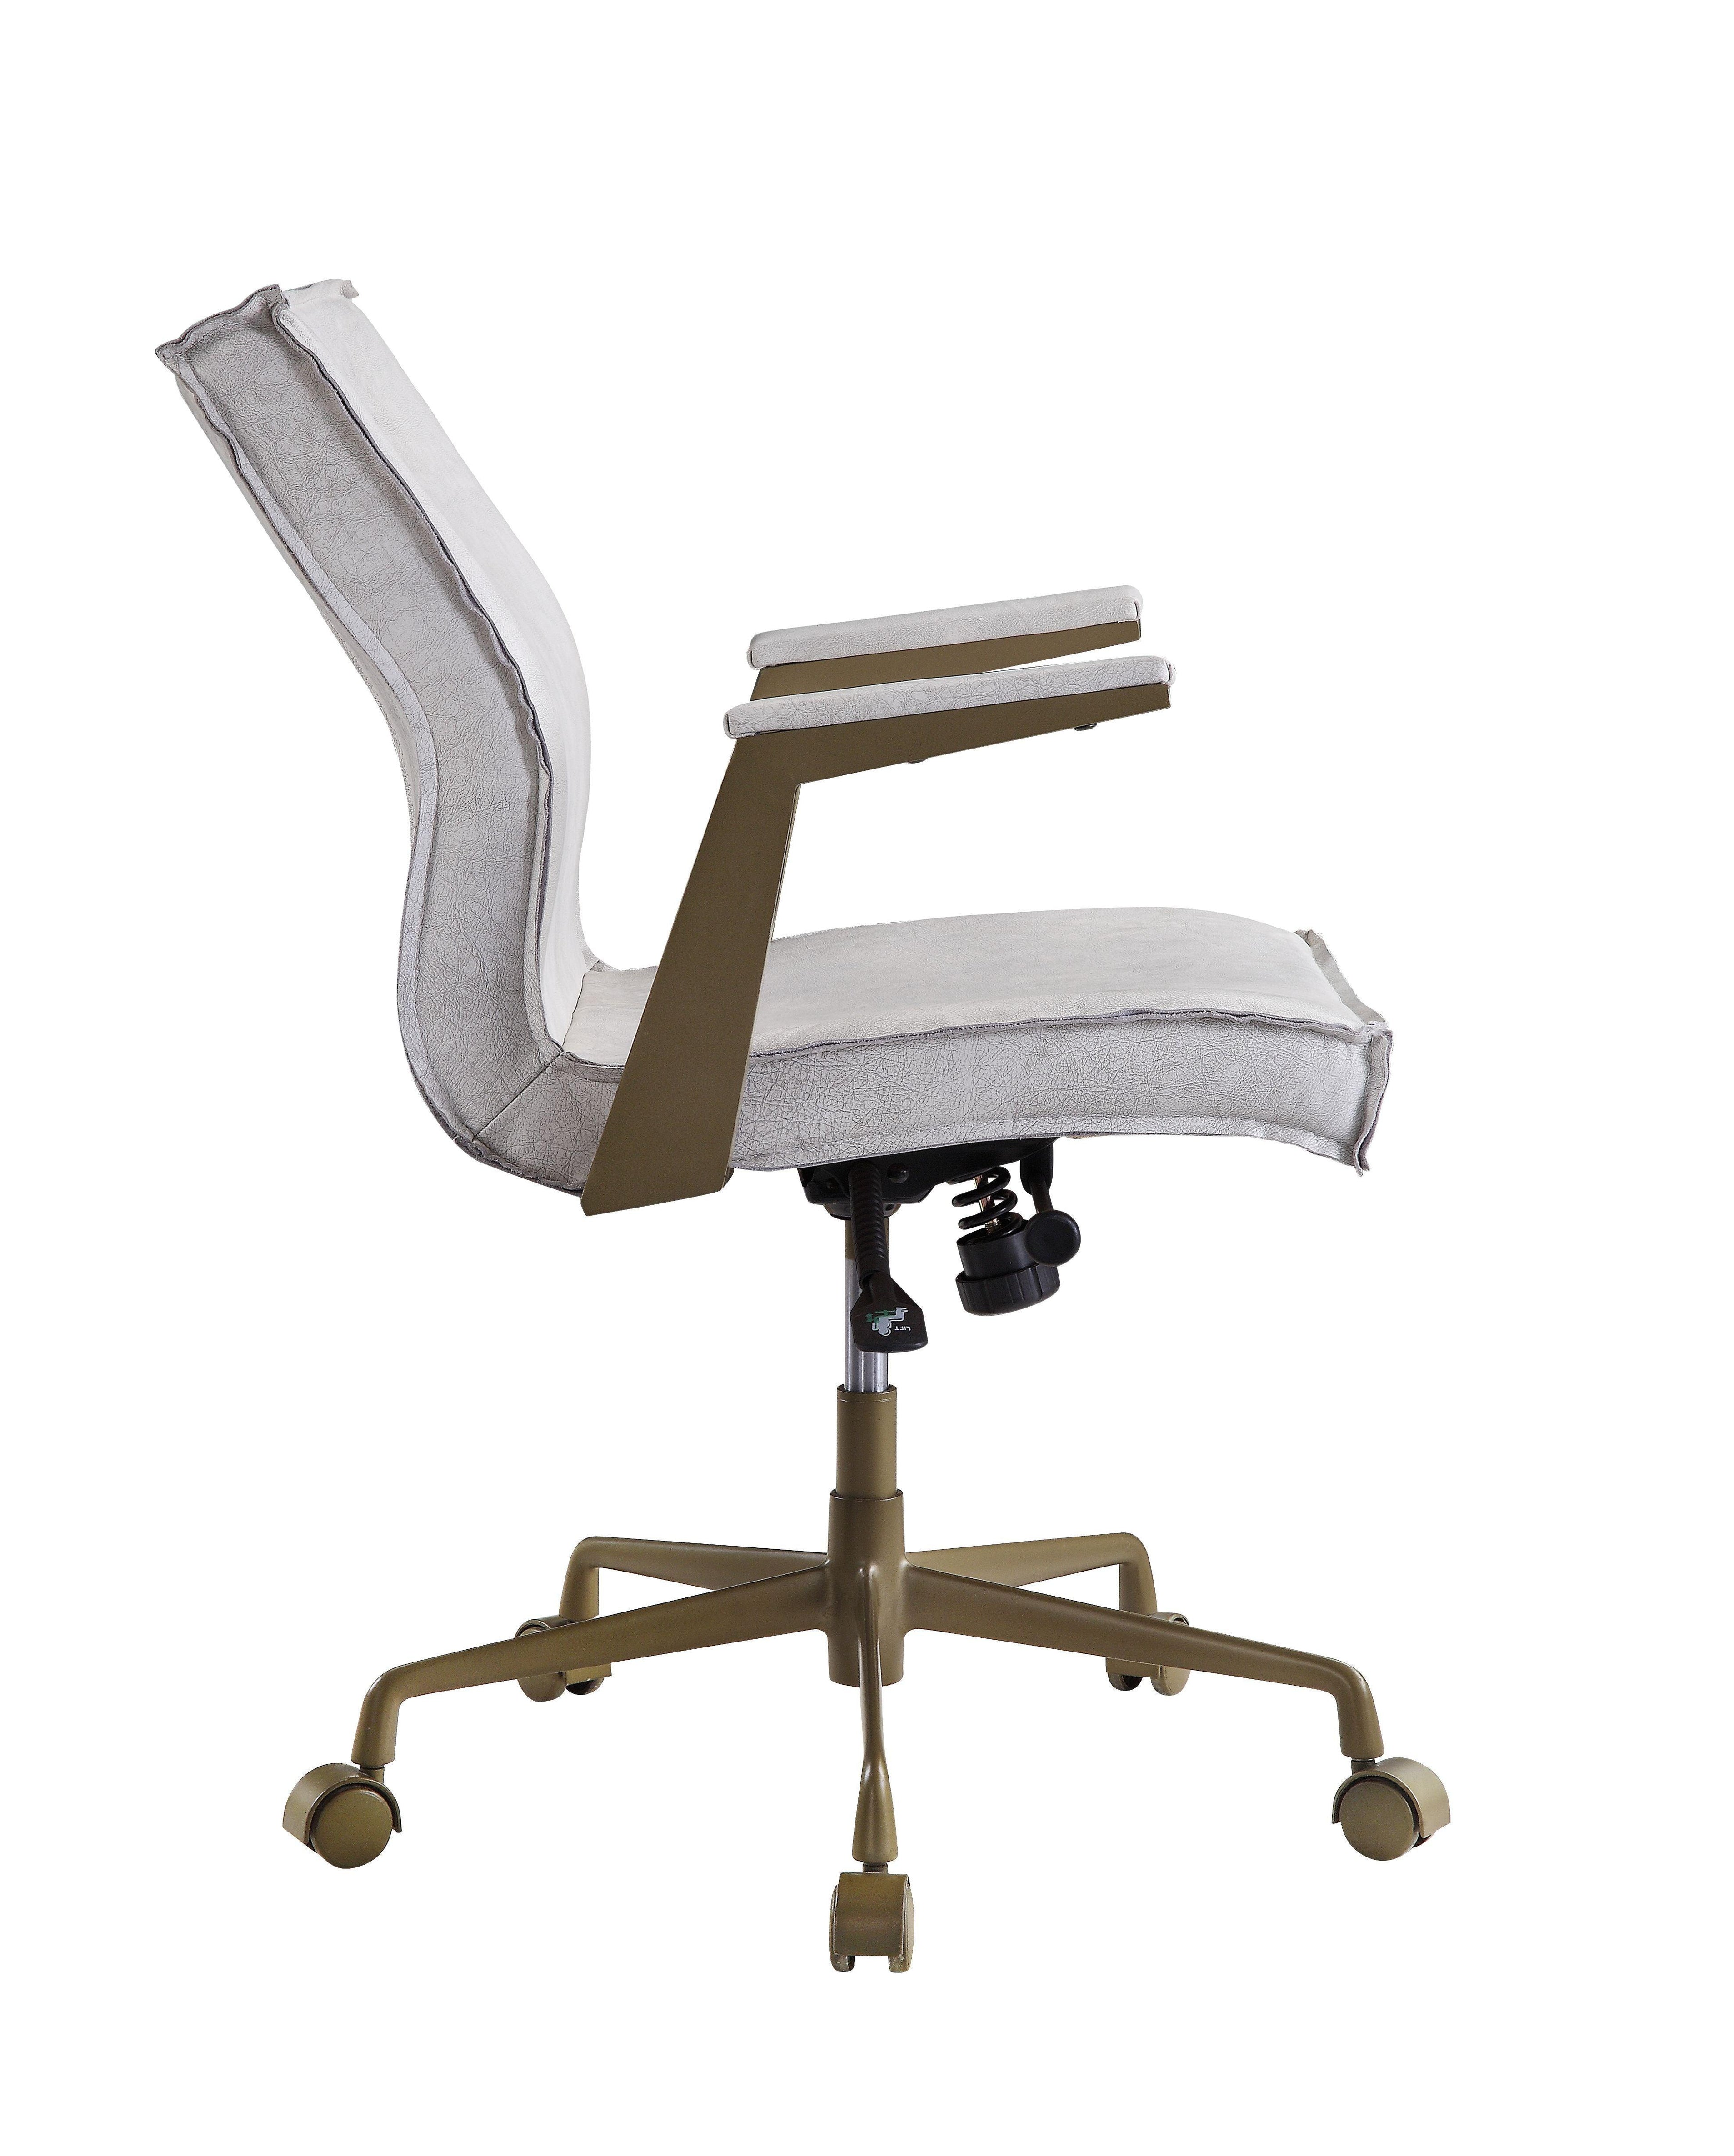 ACME - Attica - Executive Office Chair - 5th Avenue Furniture